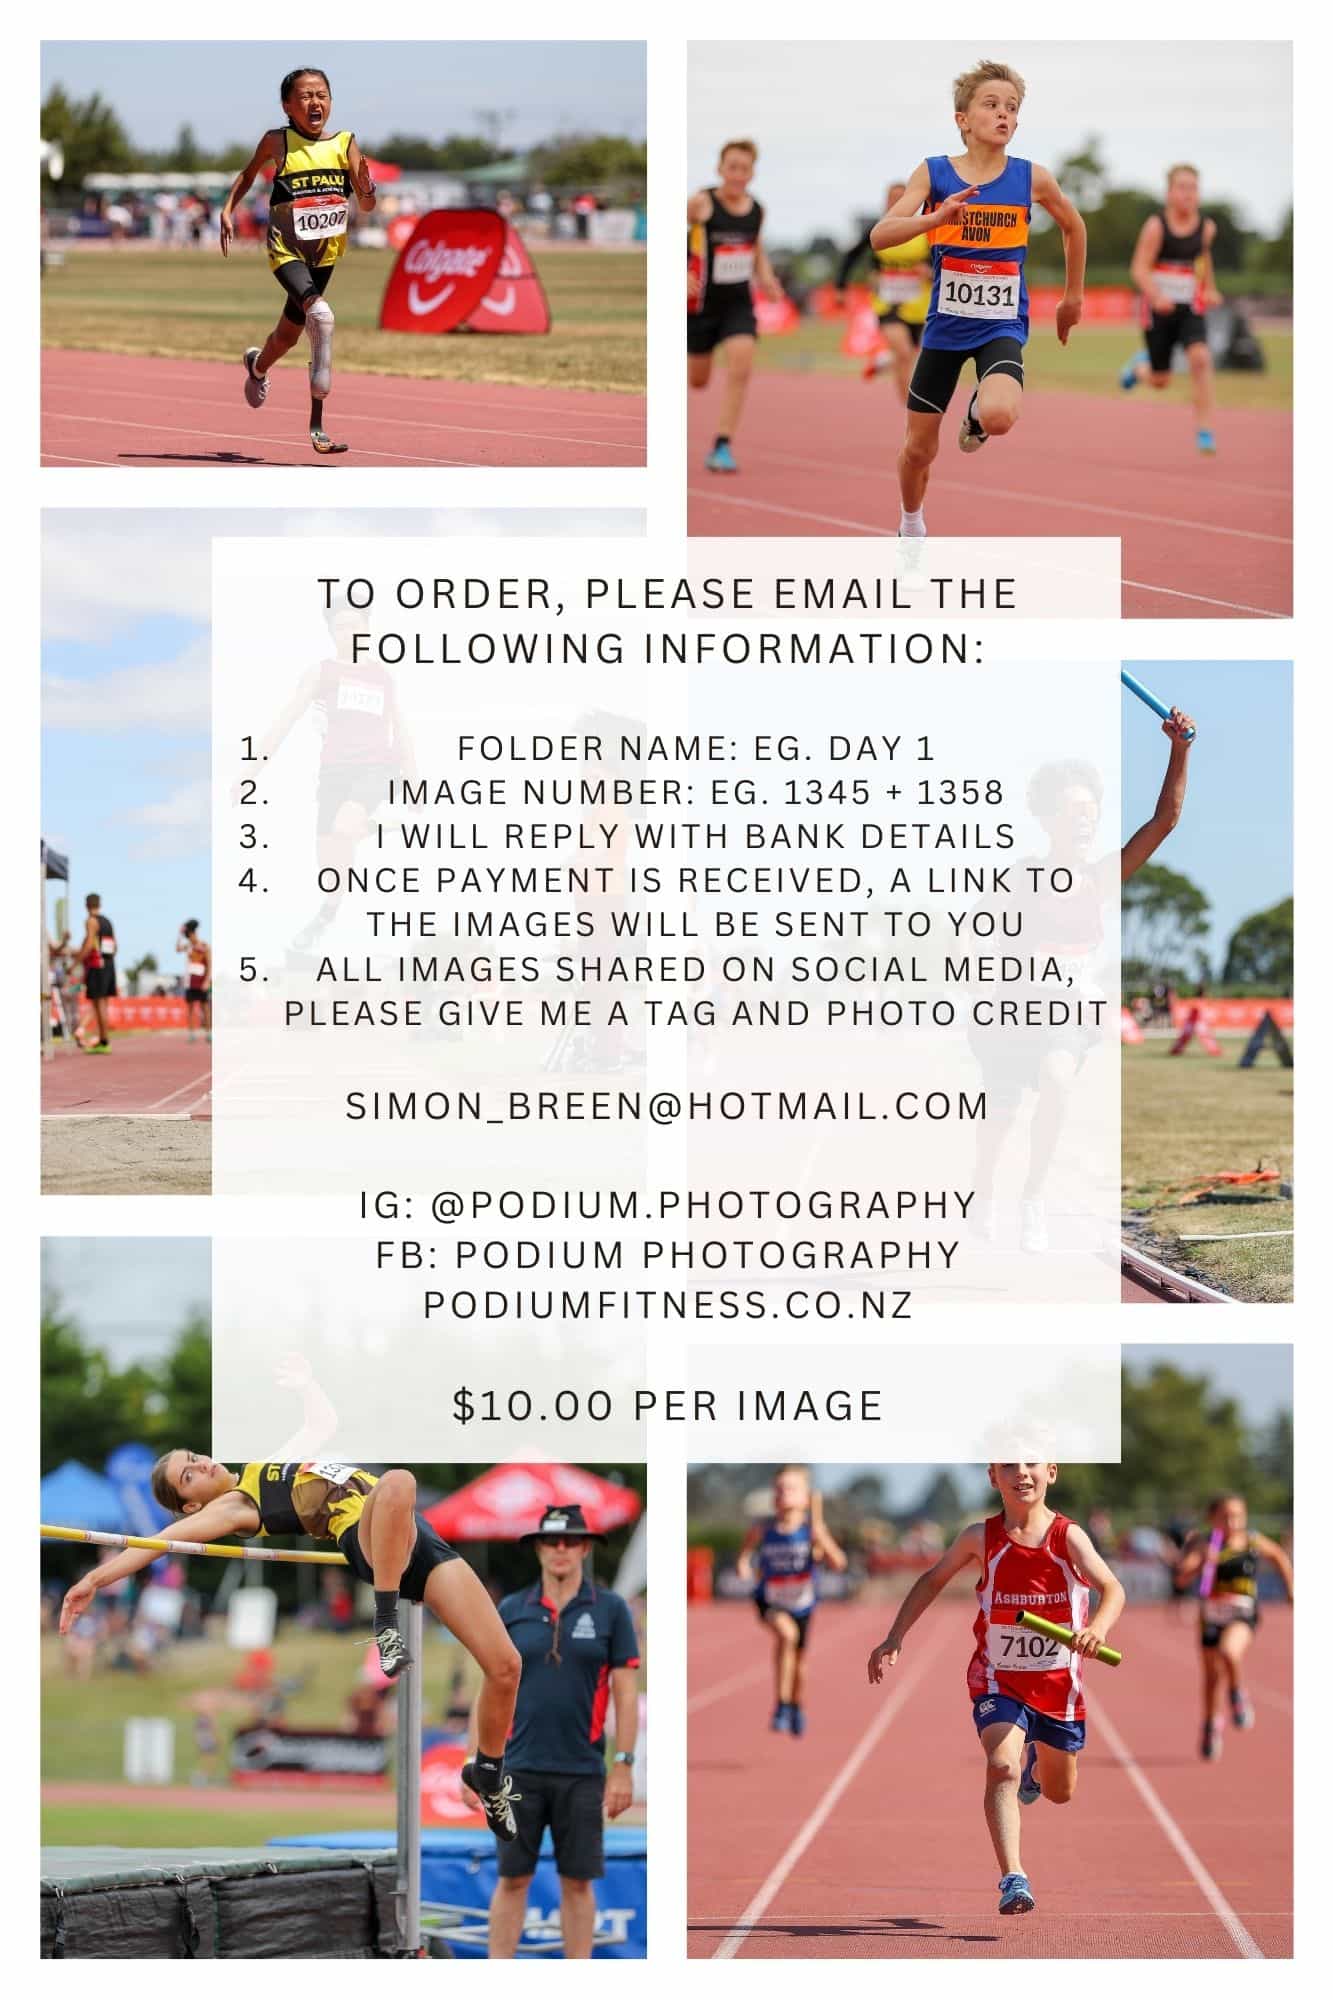 Podium Photography $15.00 per image IG: @podium.photography FB: Podium Photography - HOW TO ORDER